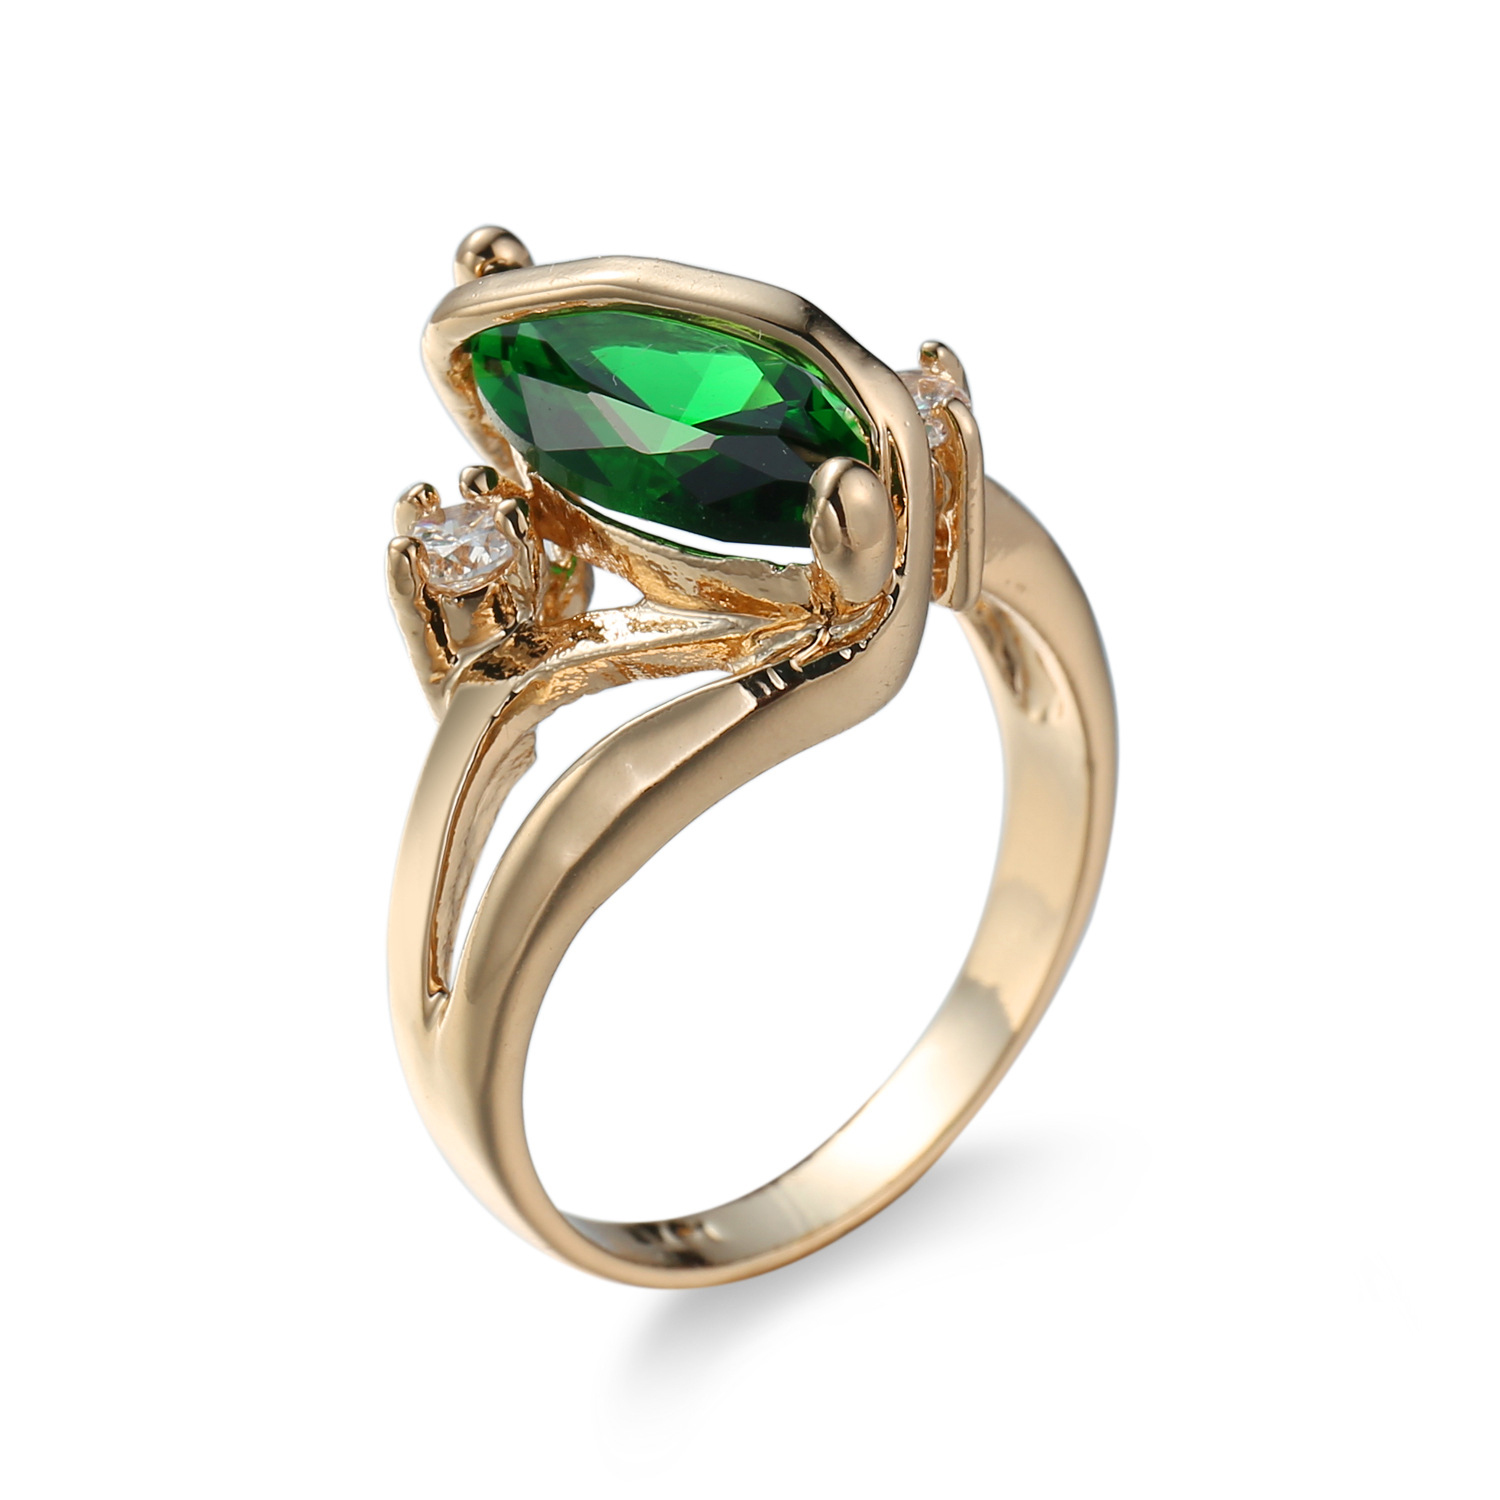 2:Emerald